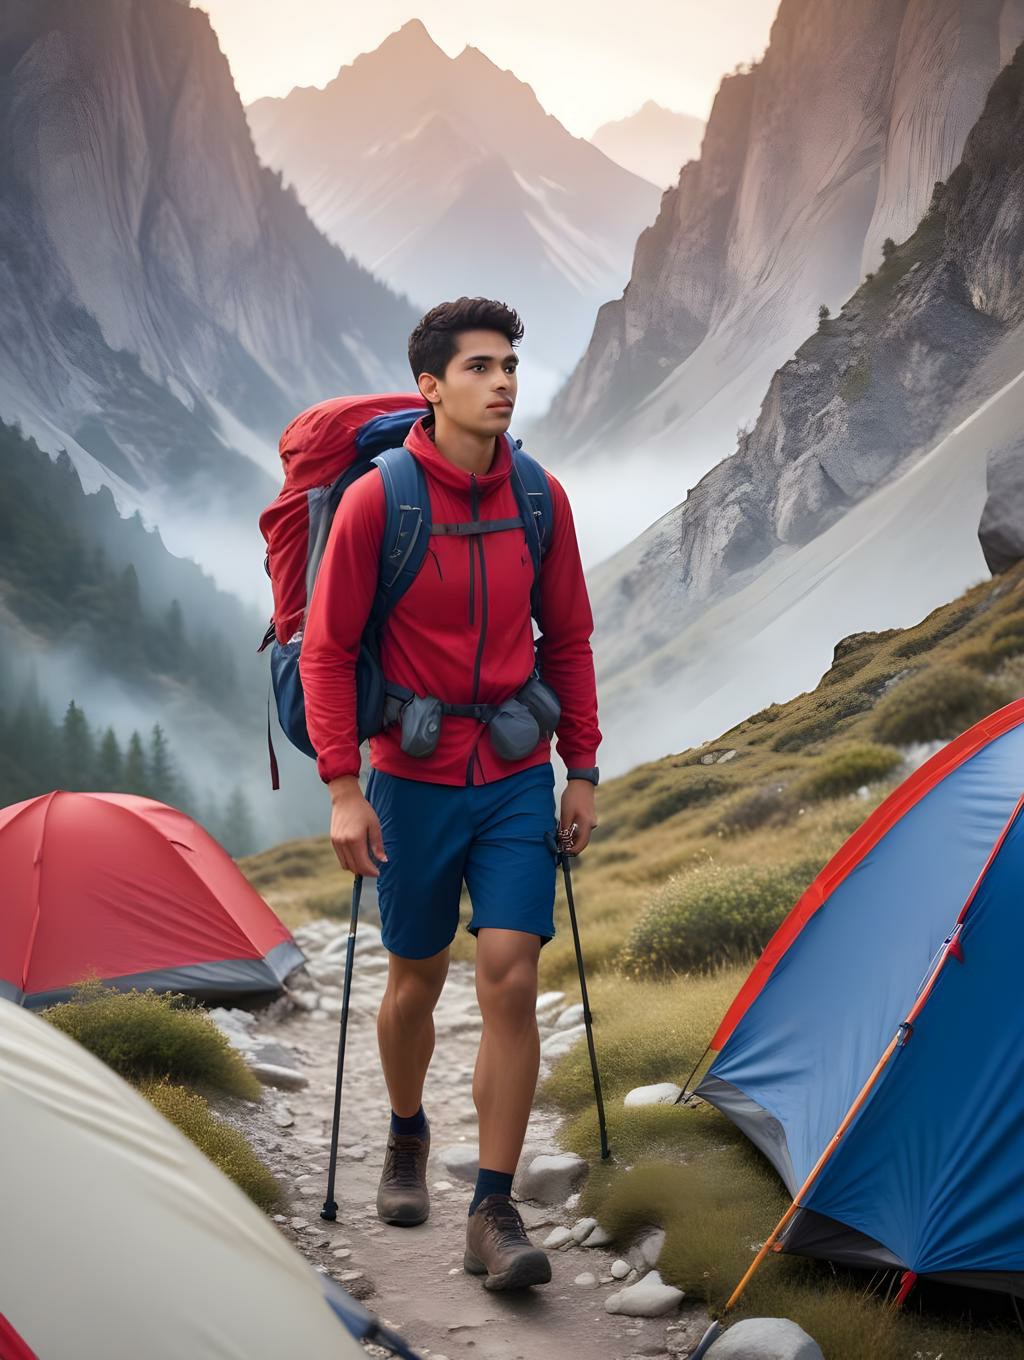 Camping Adventure Men: Image Frames & Family Portraits-Theme:1